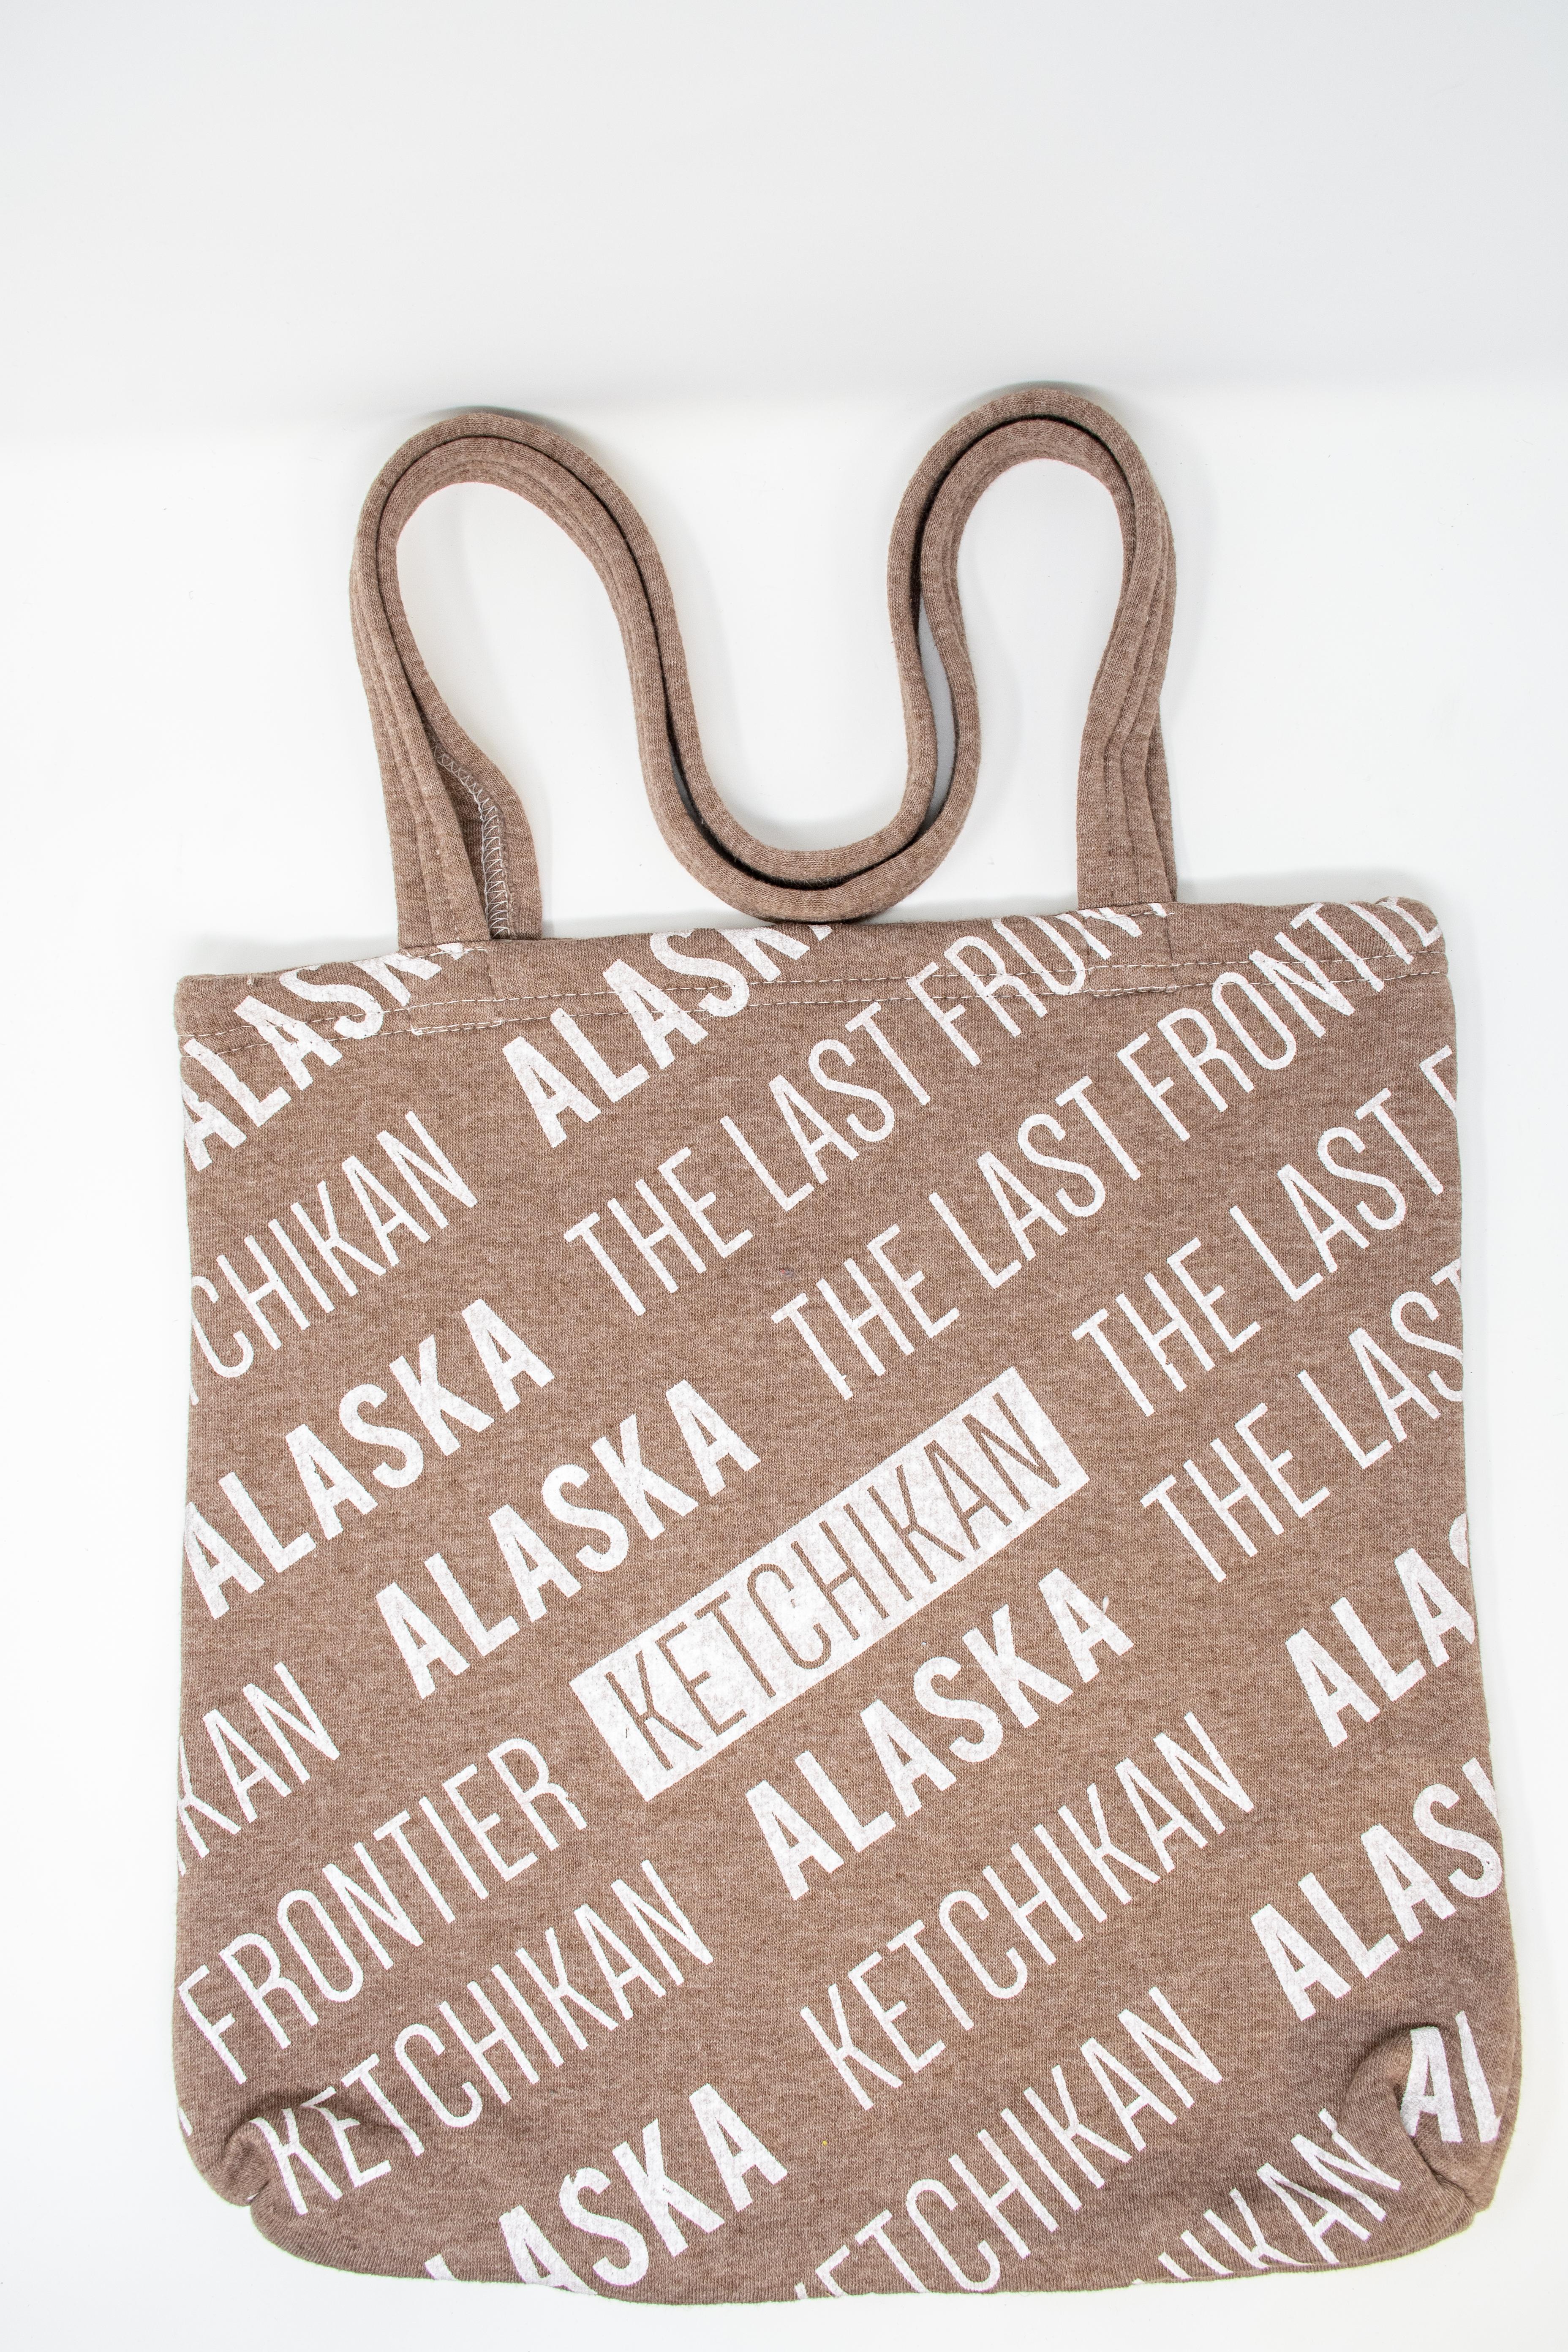  Large Bag - Alaska